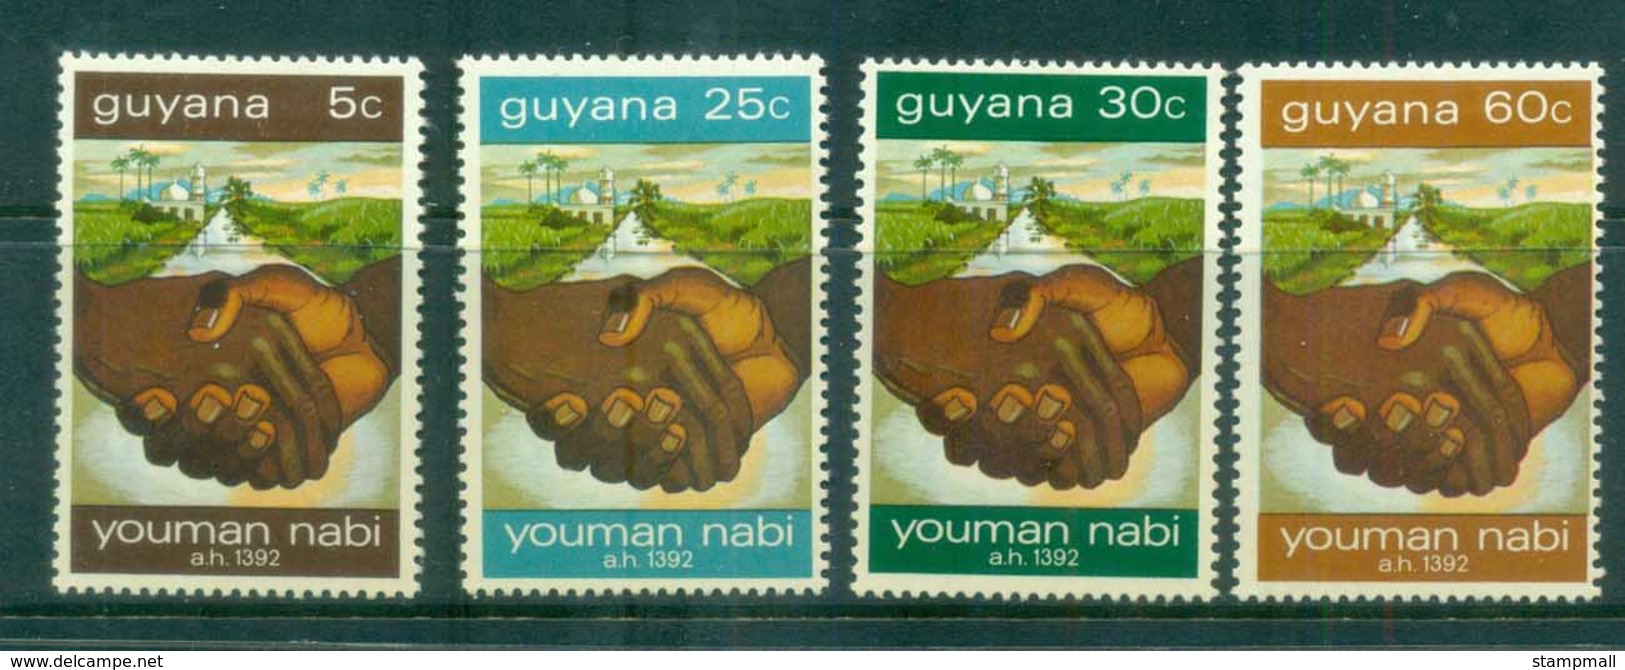 Guyana 1972 Youman Nabi Festival MH Lot79343 - Guyana (1966-...)